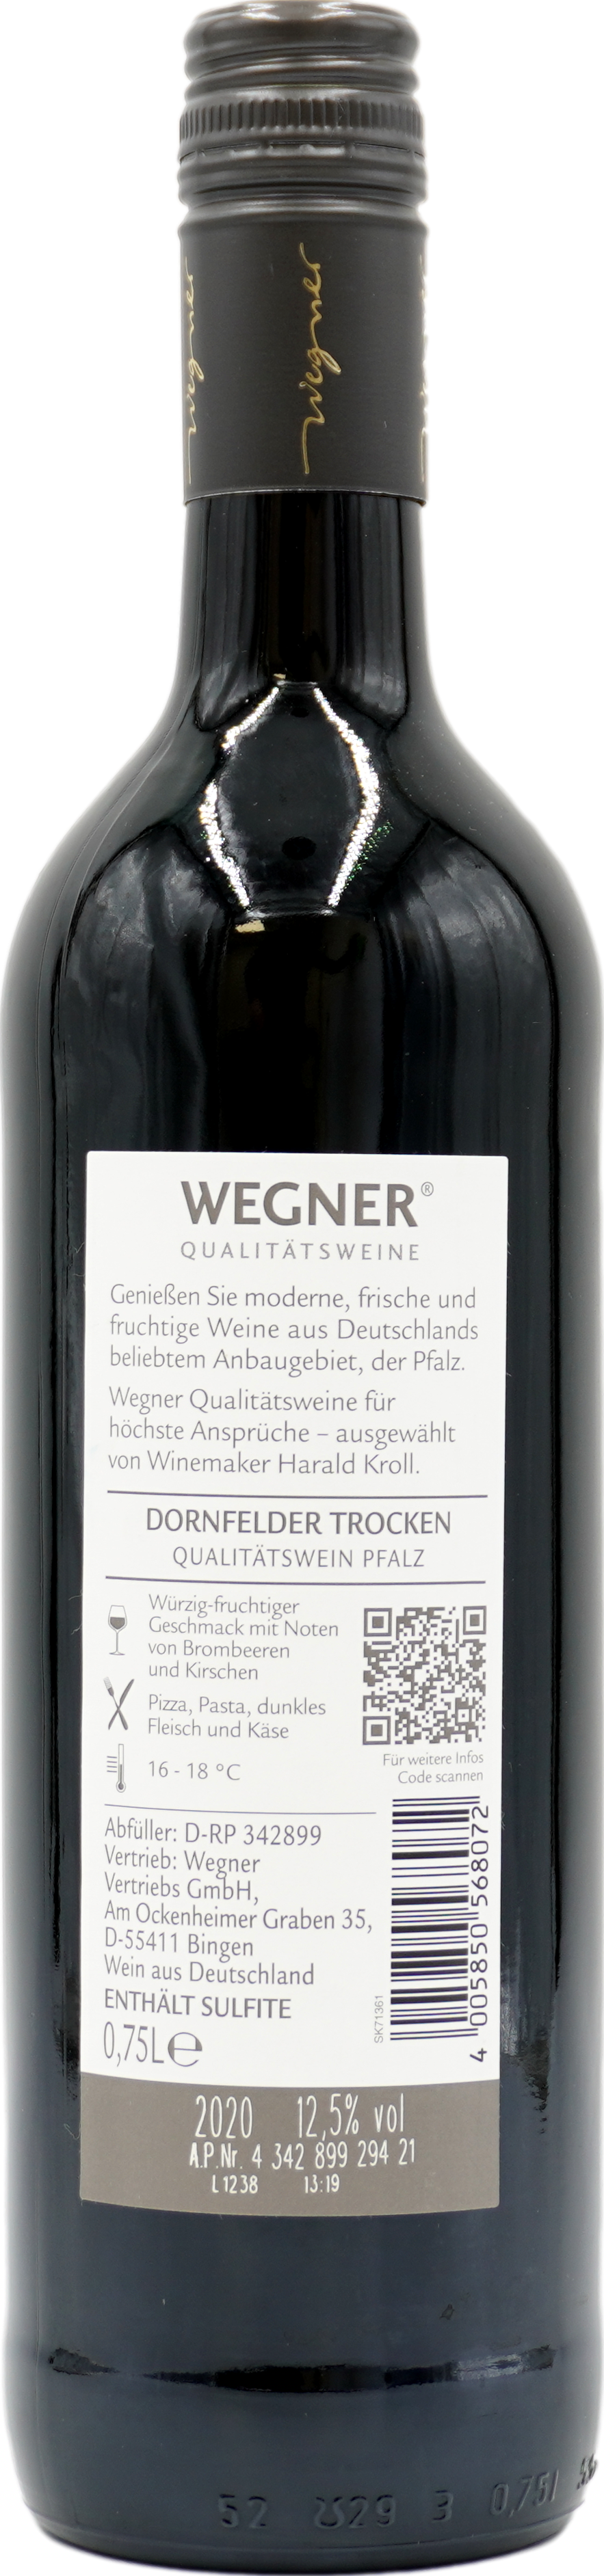 Wegner Dornfelder Pfalz QbA 2005 Getränke-Service | trocken jetzt bestellen rot KACHOURI liefern online & lassen